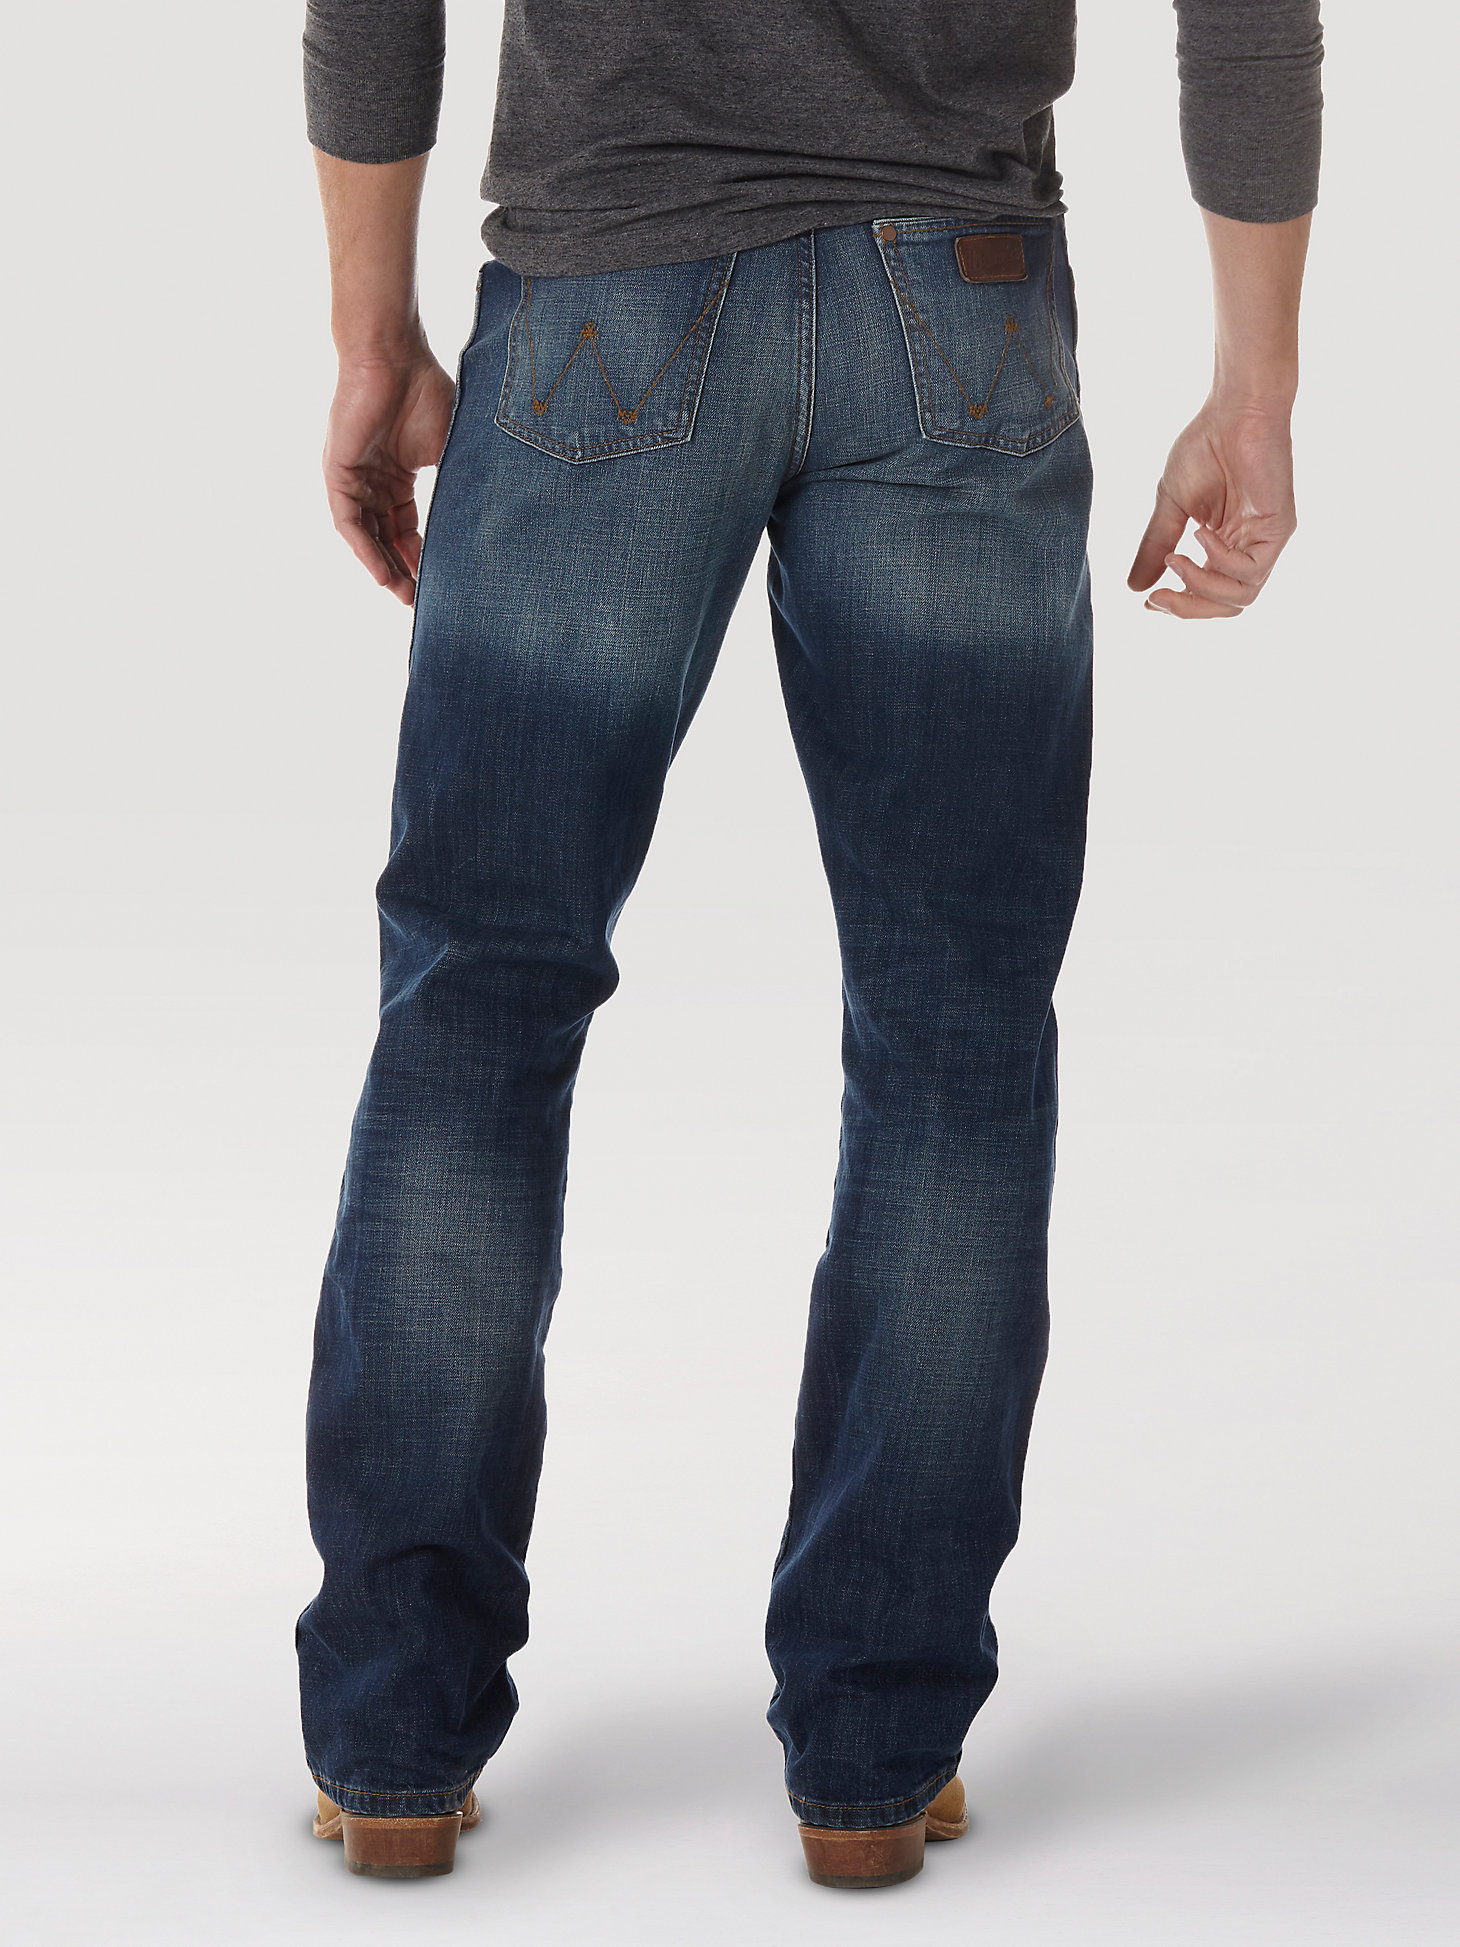 WRANGLER Retro Premium Boy's Relaxed Fit Boot Cut Light Denim Jeans JRT20ST NWT 